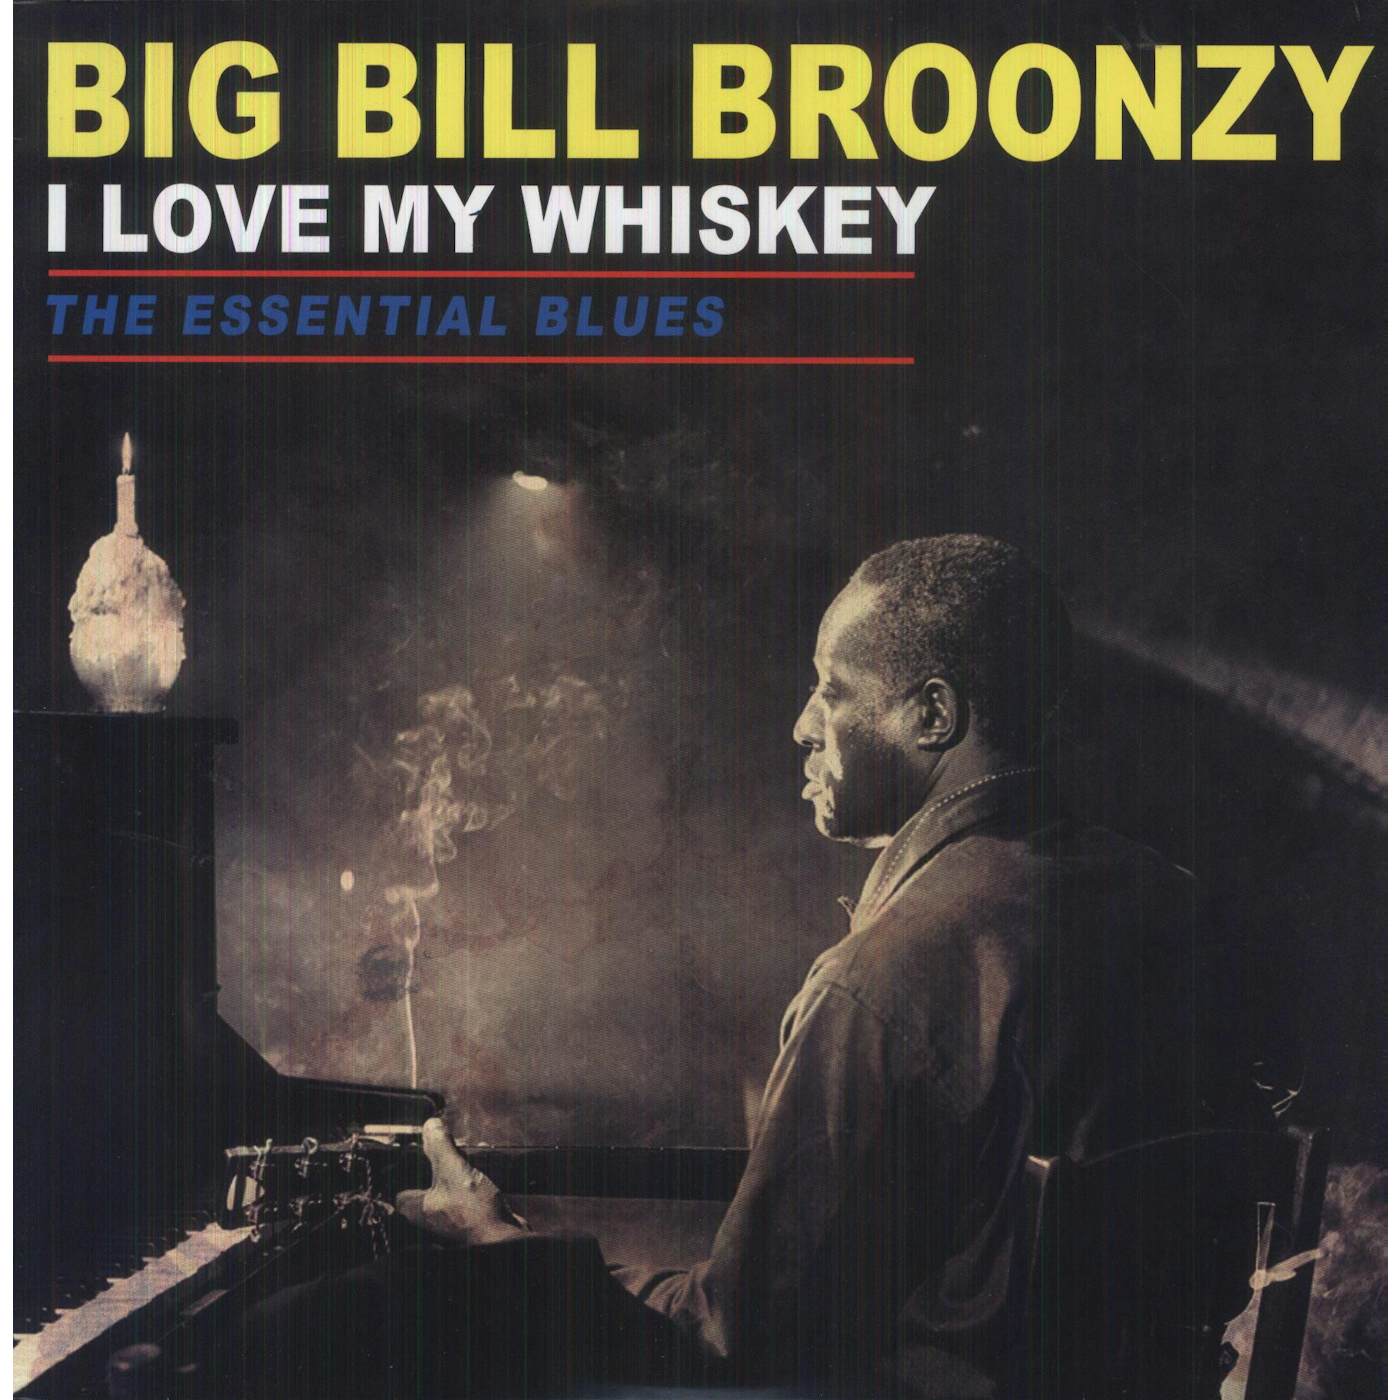 Big Bill Broonzy LOVE MY WHISKEY: THE ESSENTIAL BLUES Vinyl Record